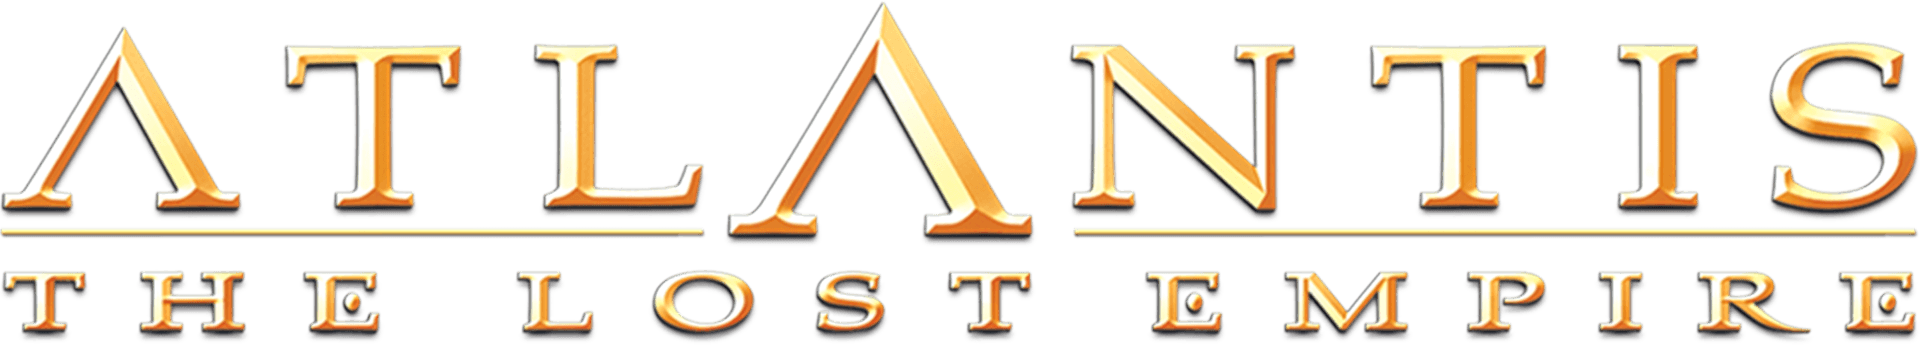 Atlantis: The Lost Empire logo